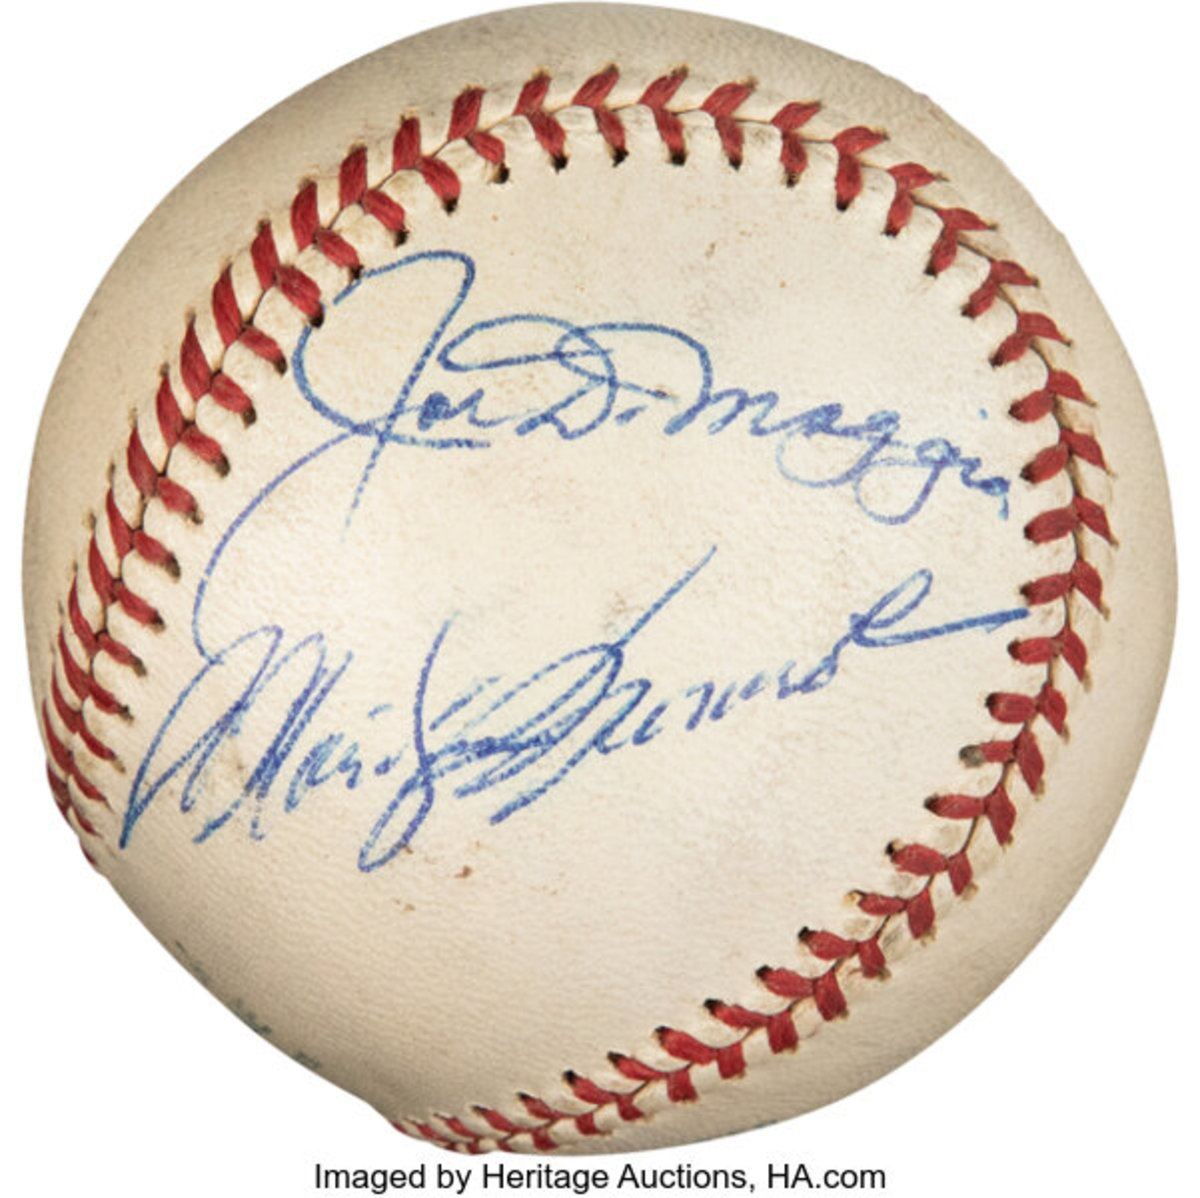 Autographed Atlanta Braves Hank Aaron Fanatics Authentic 1957